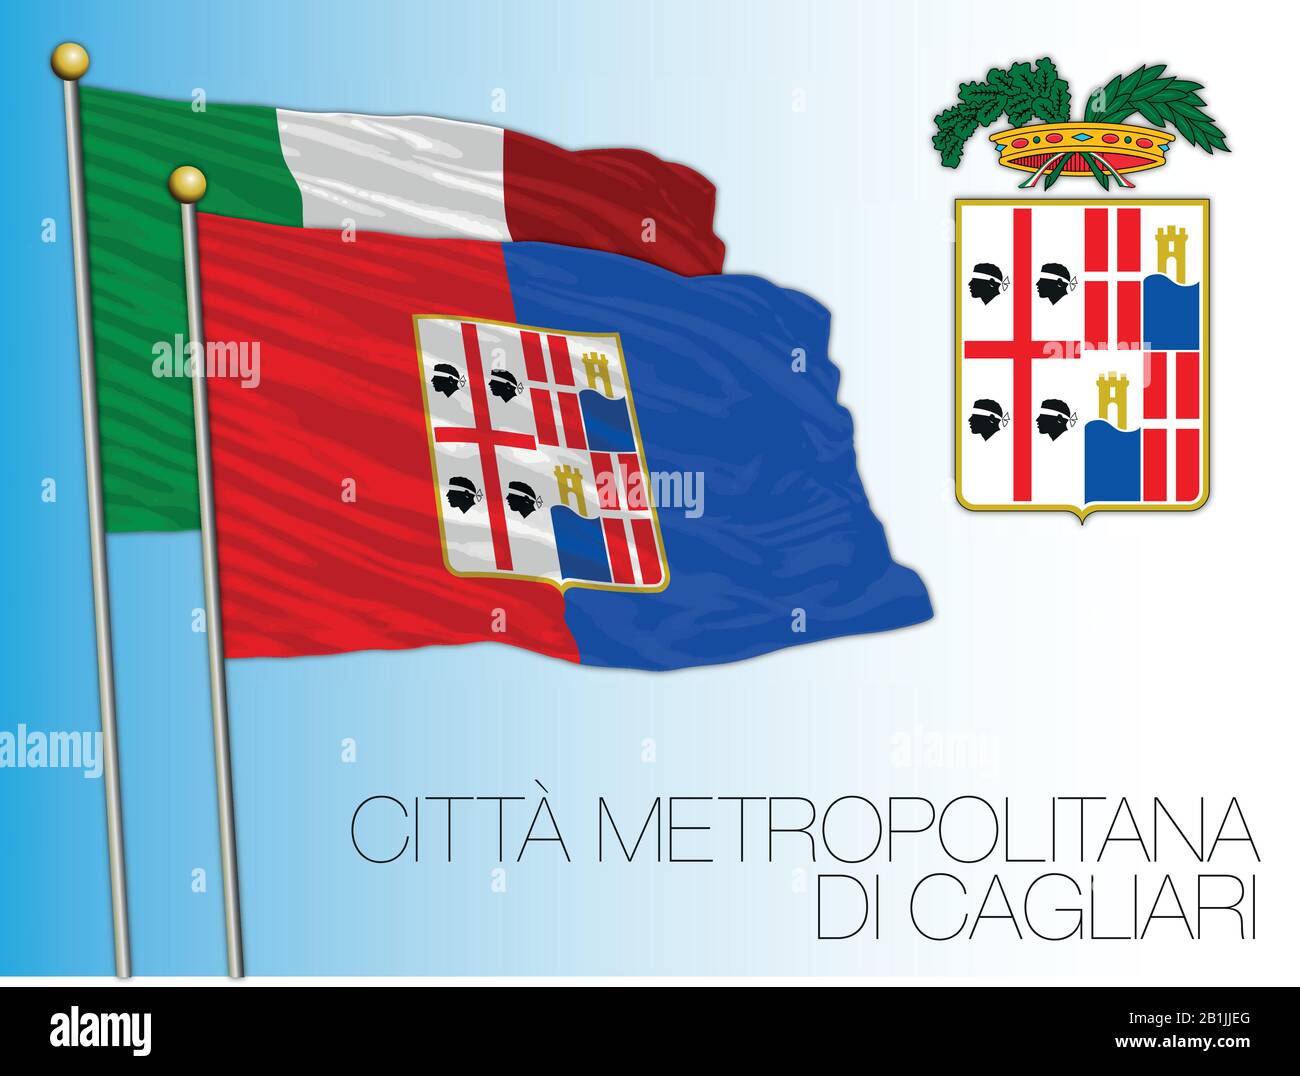 Citta Metropolitana di Cagliari, ville métropolitaine de Cagliari, Sardaigne, drapeau et armoiries, Italie, illustration vectorielle Illustration de Vecteur